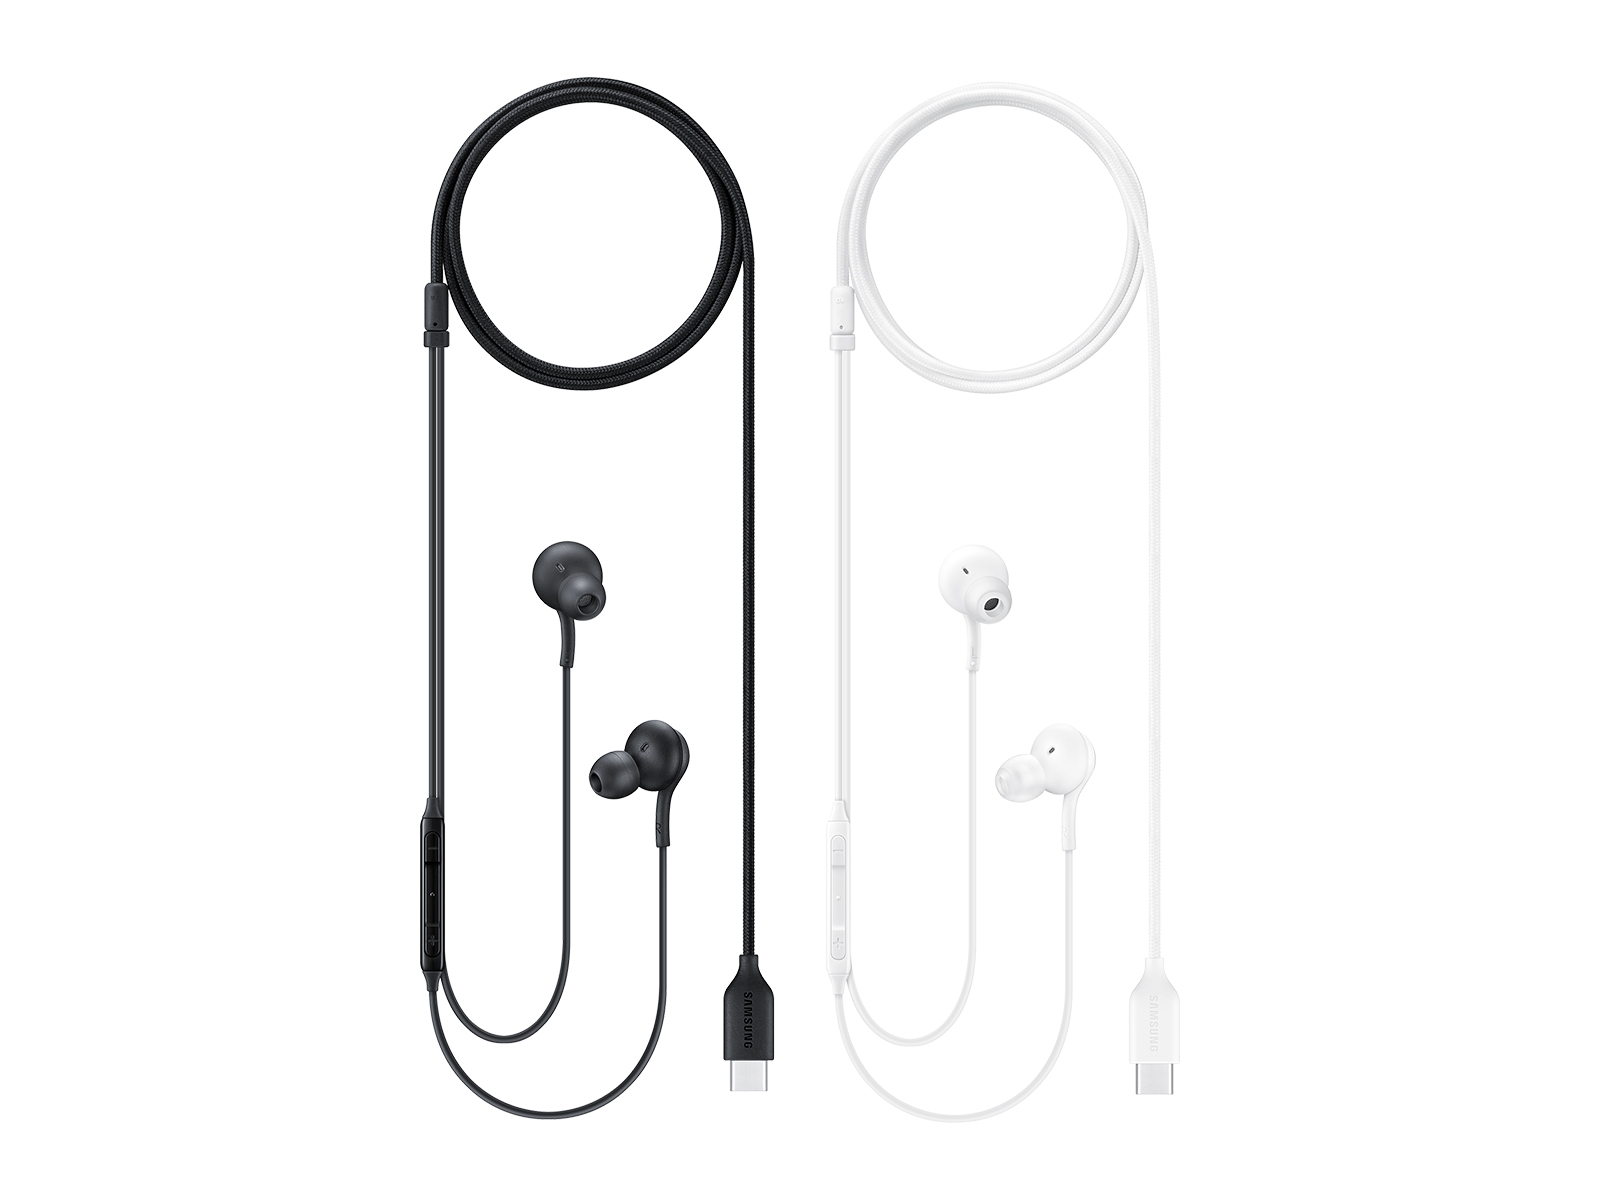 Samsung Type-C Headphones, Black Mobile Accessories - EO-IC100BBEGUS